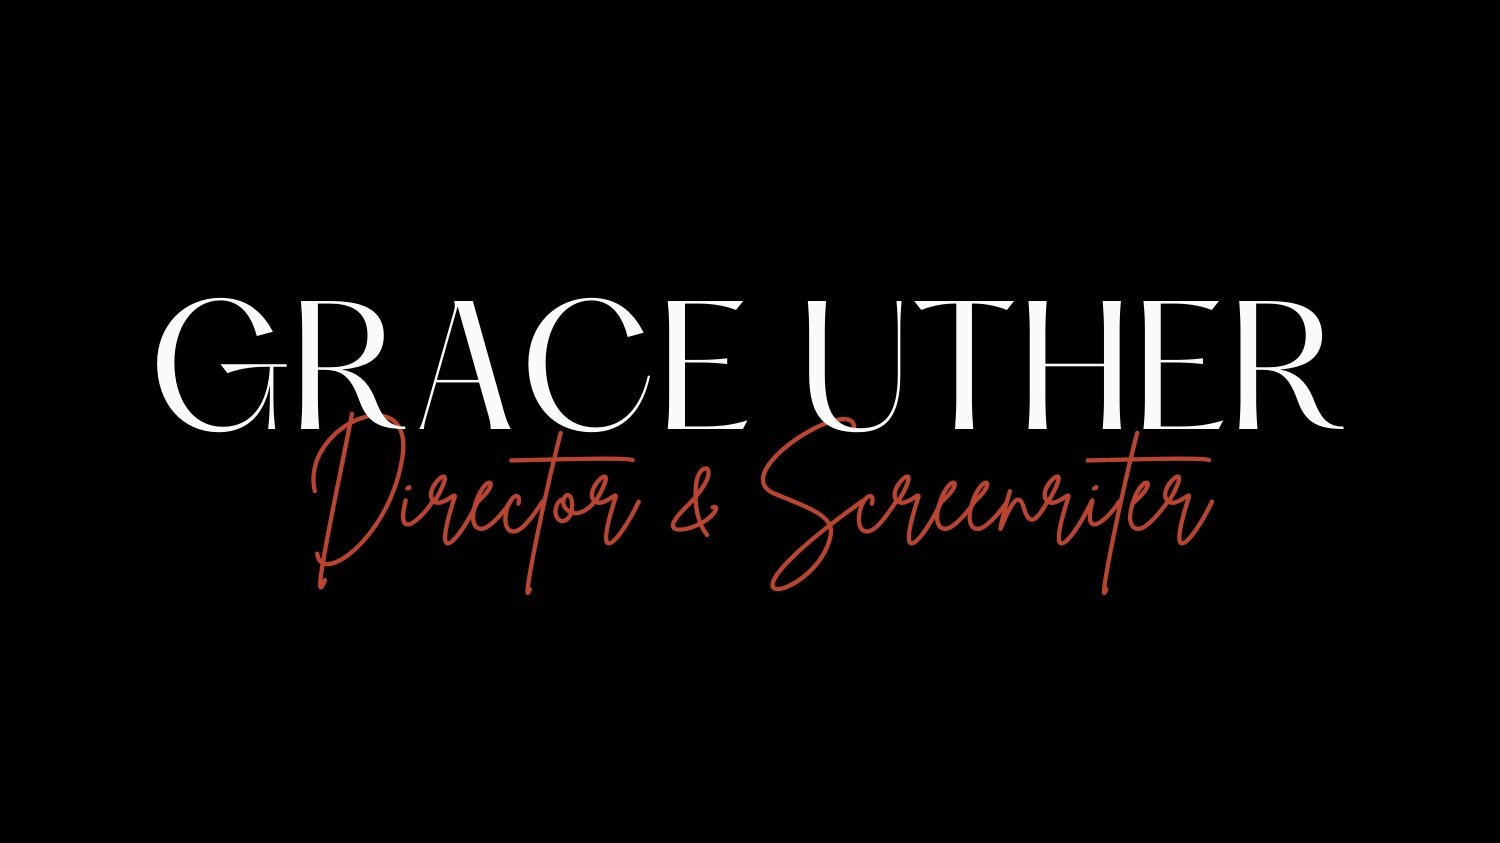 Grace Uther - Director &amp; Screenwriter